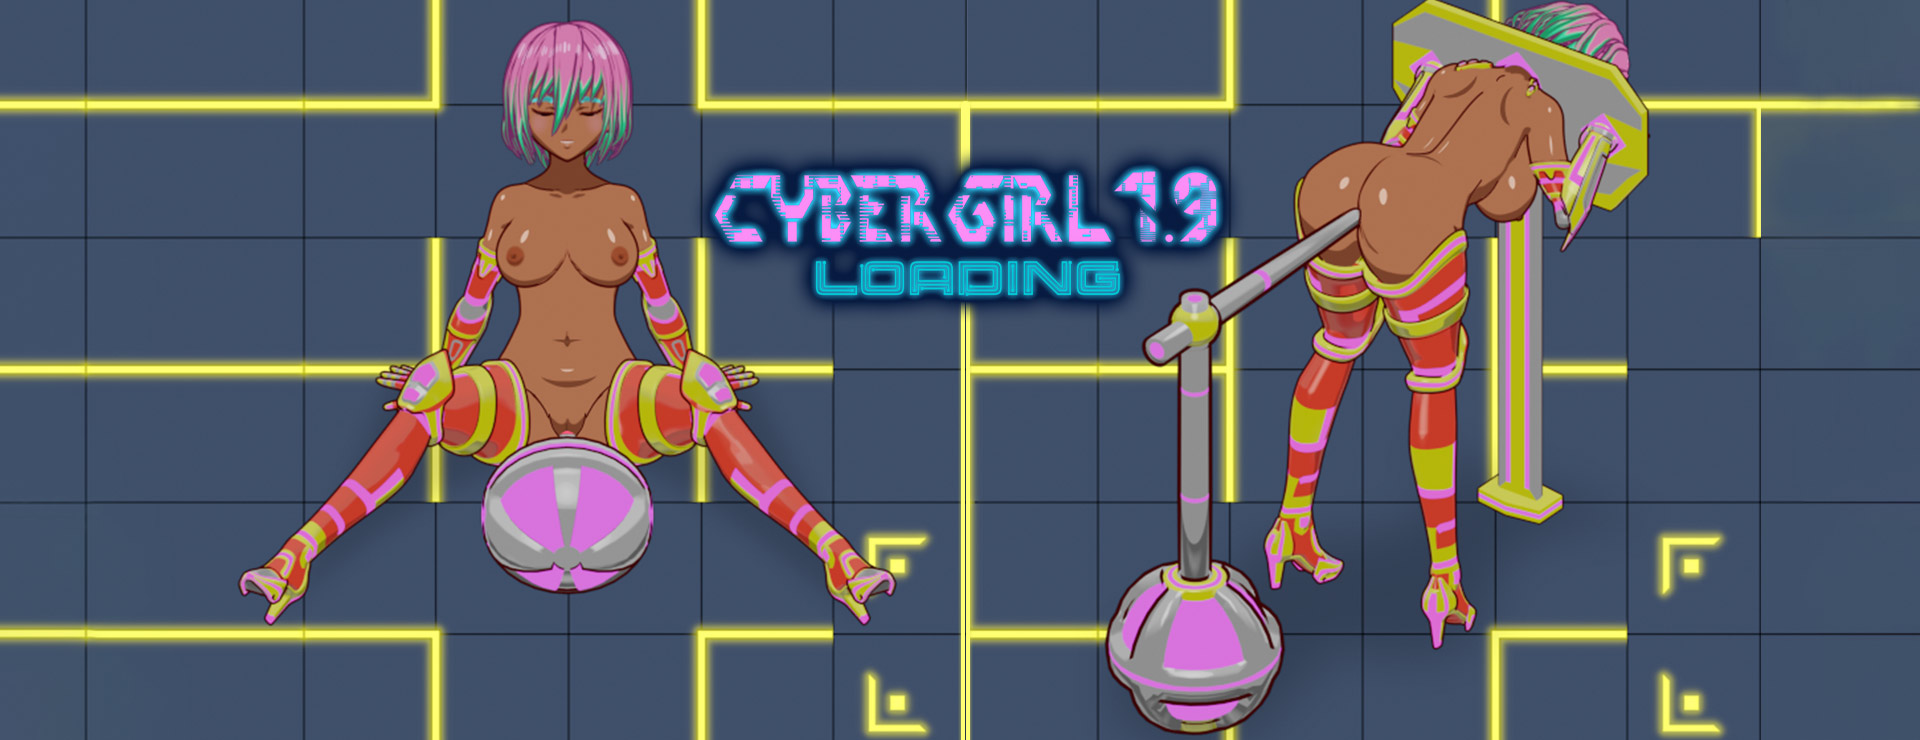 Cyber Girl 1.9 LOADING - 动作冒险游戏 遊戲